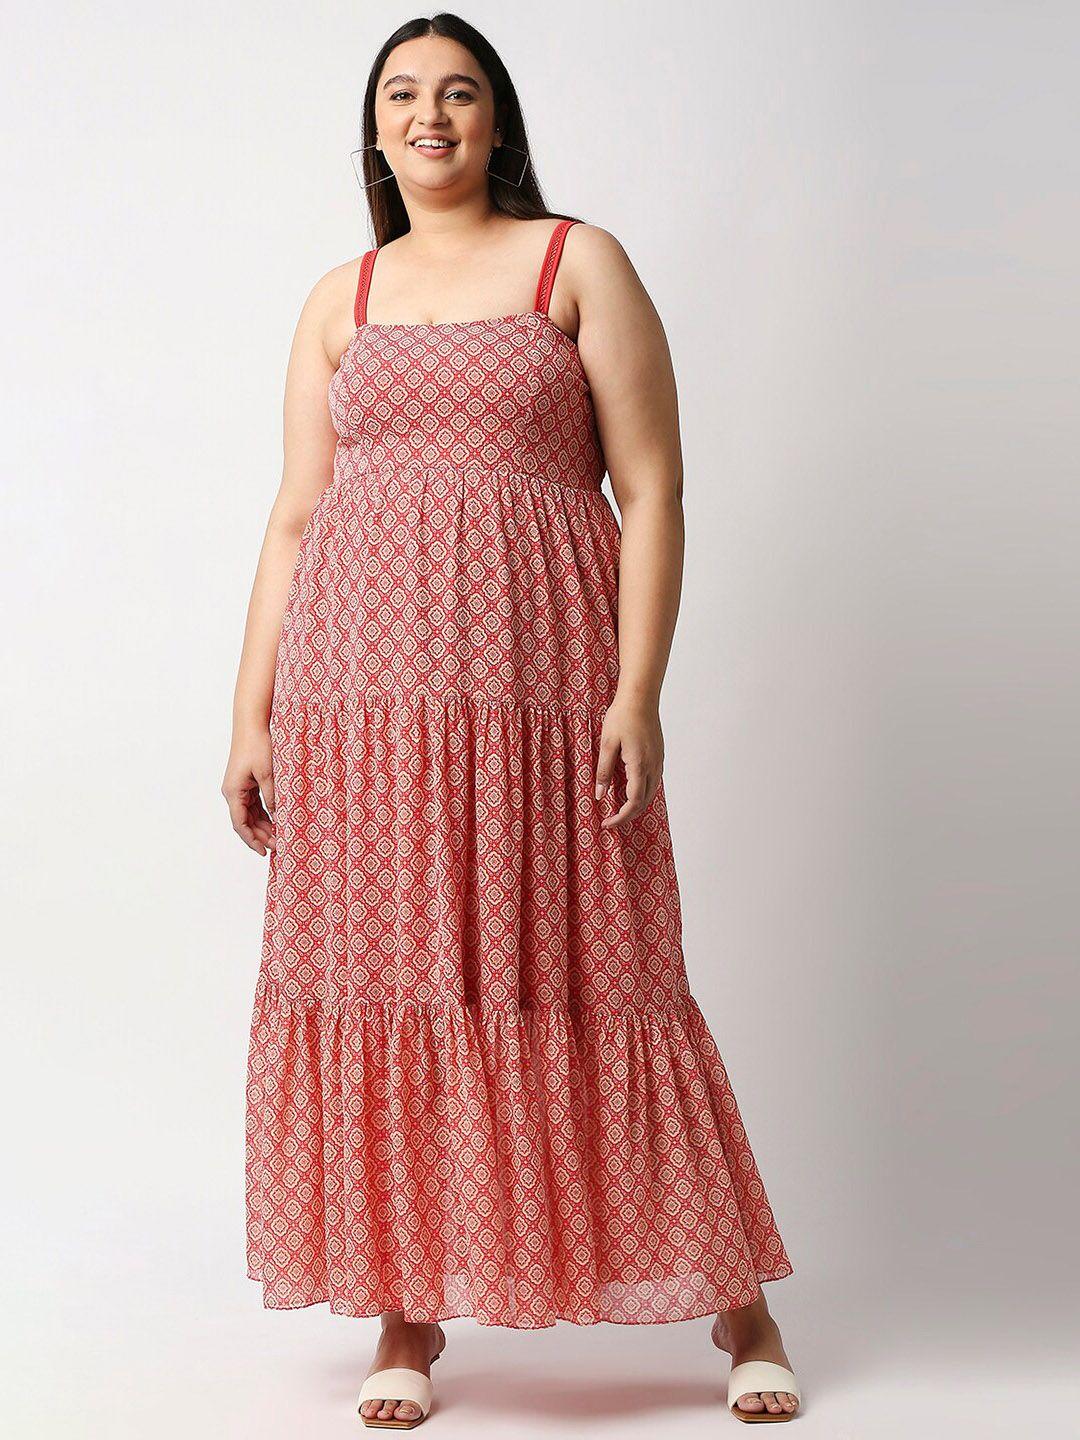 20dresses plus size red chiffon maxi dress